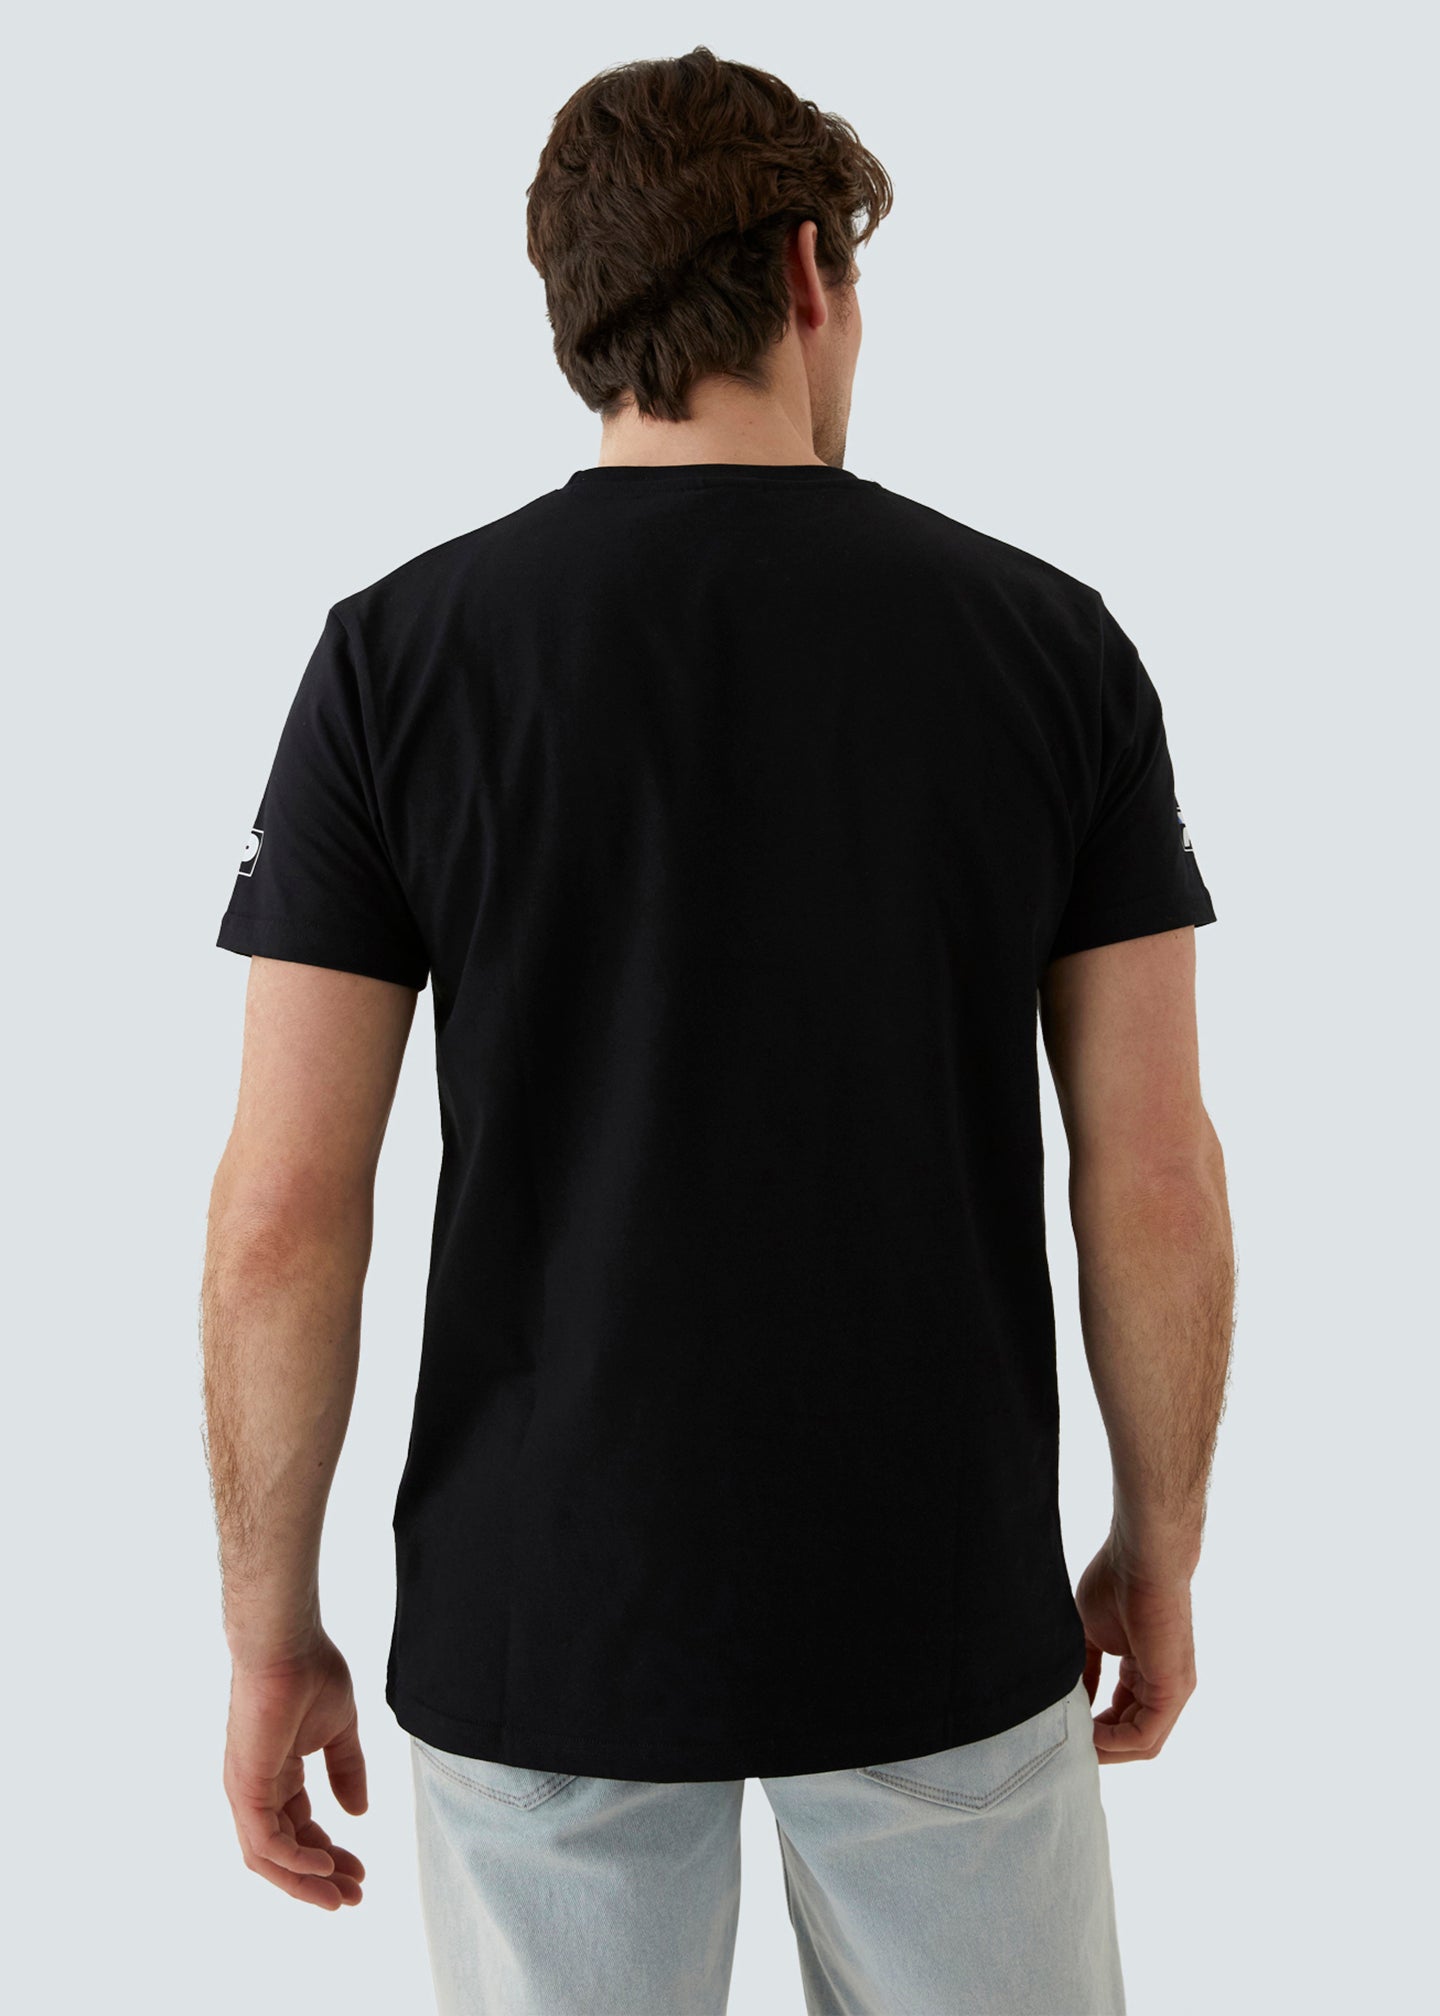 Joe T-Shirt - Black